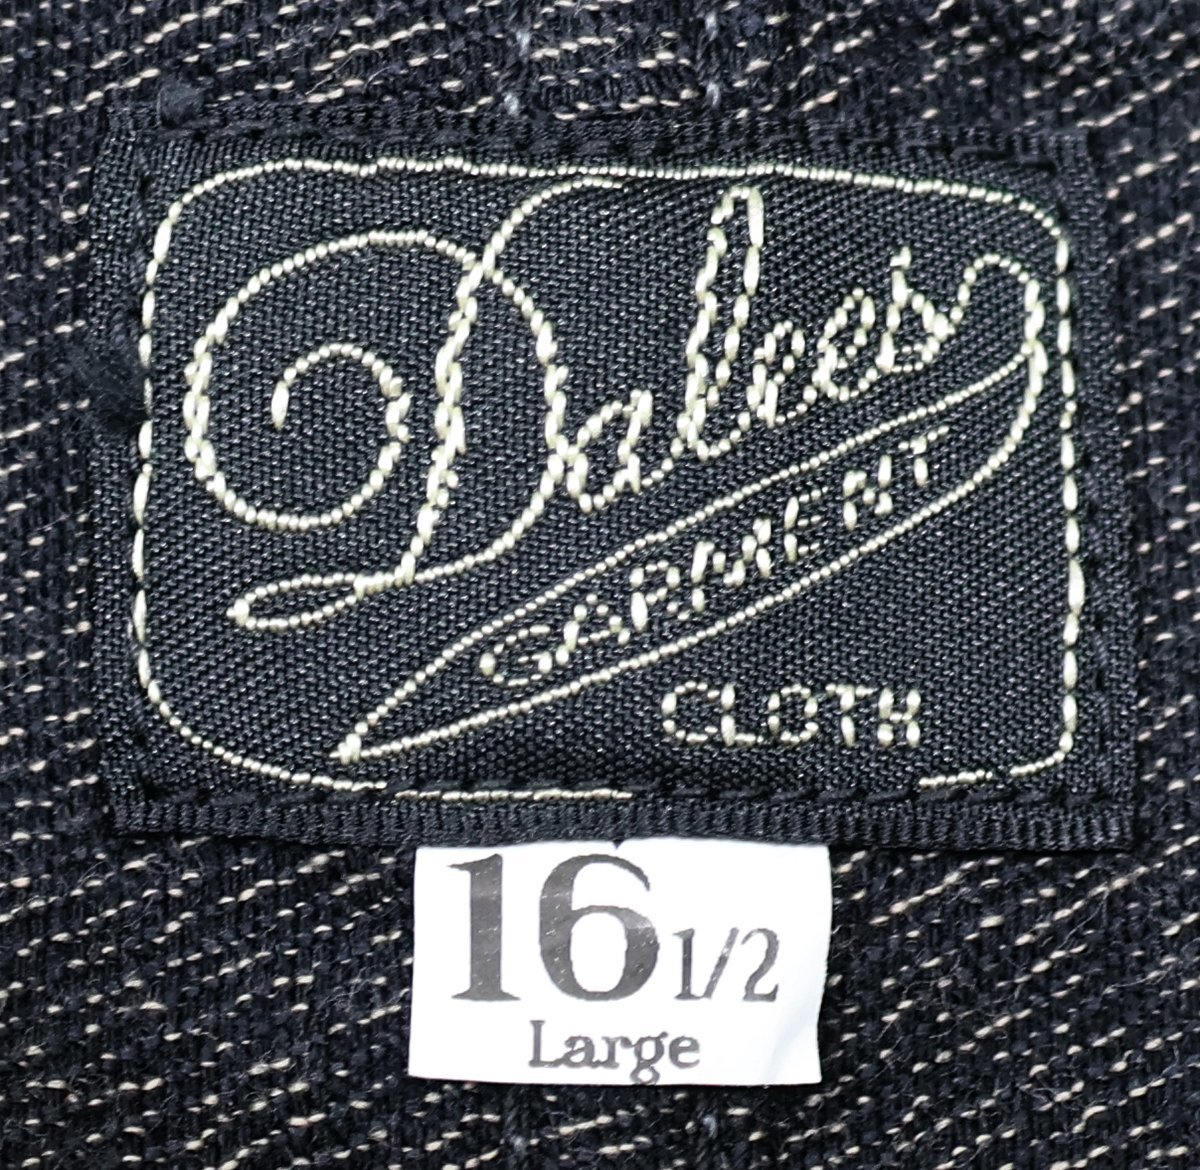 DALEE'S&Co (ダリーズアンドコー) Jelico...20s Jelico shirt / ジェリコシャツ 未使用品 BLACK MIX size 16.5(L) / デラックスウエア_画像6